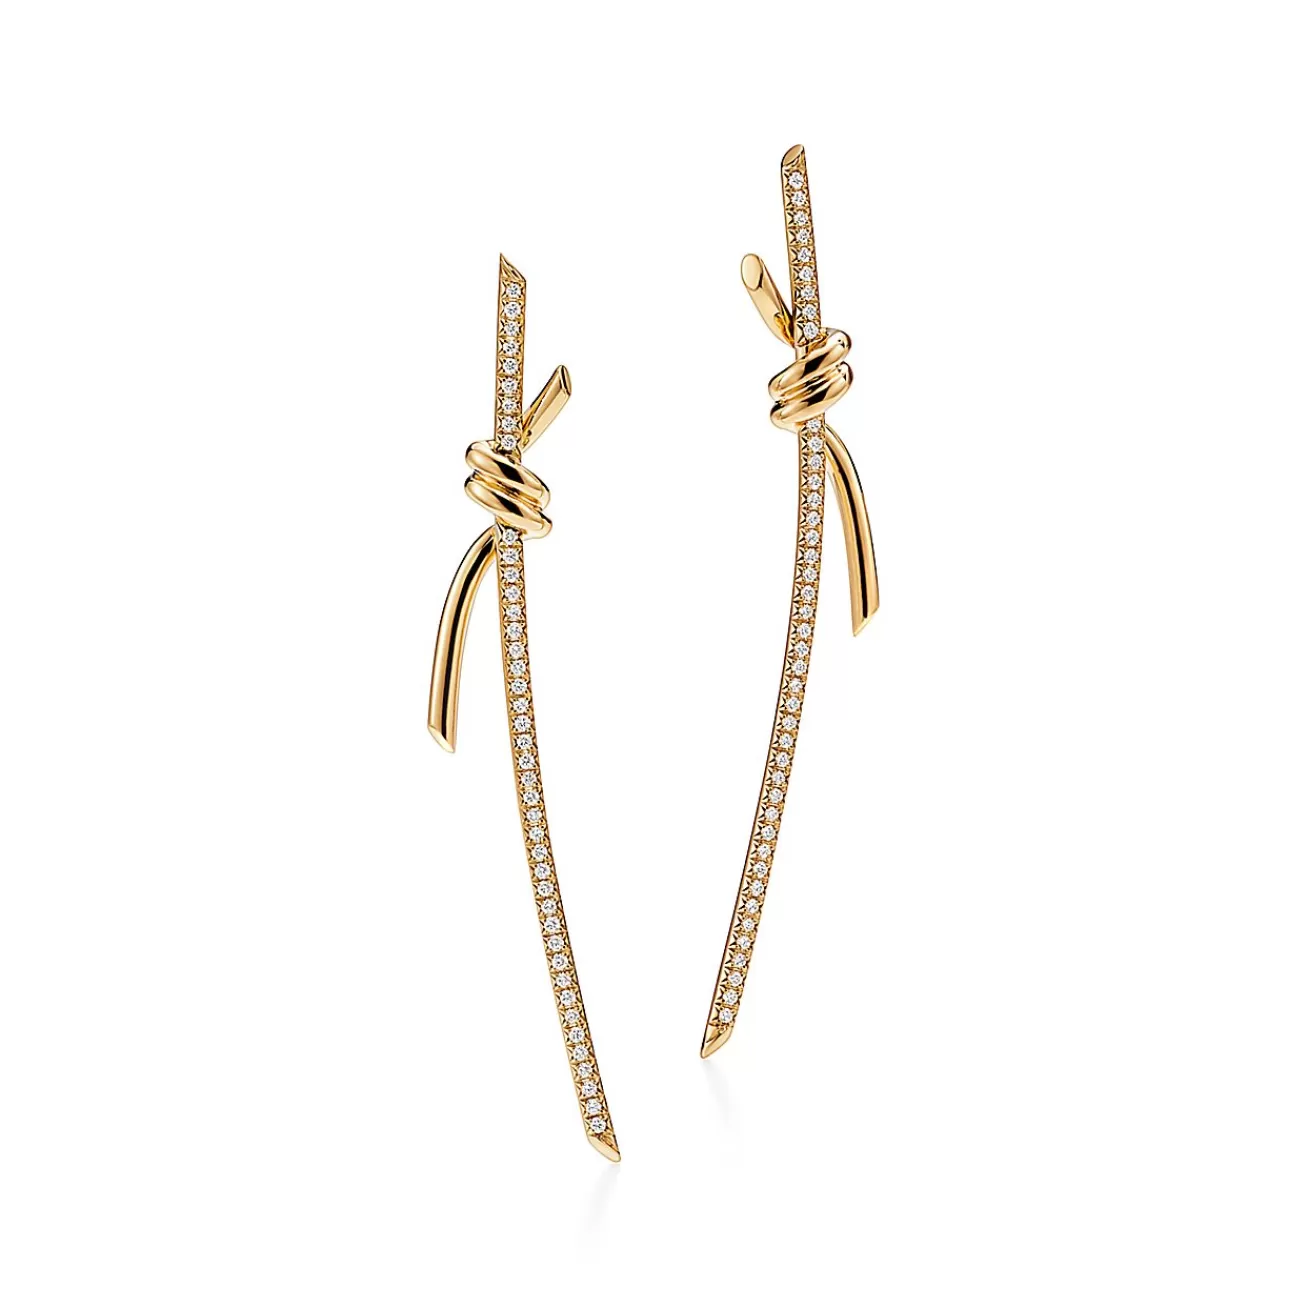 Tiffany & Co. Tiffany Knot Drop Earrings in Yellow Gold with Diamonds | ^ Earrings | Gold Jewelry